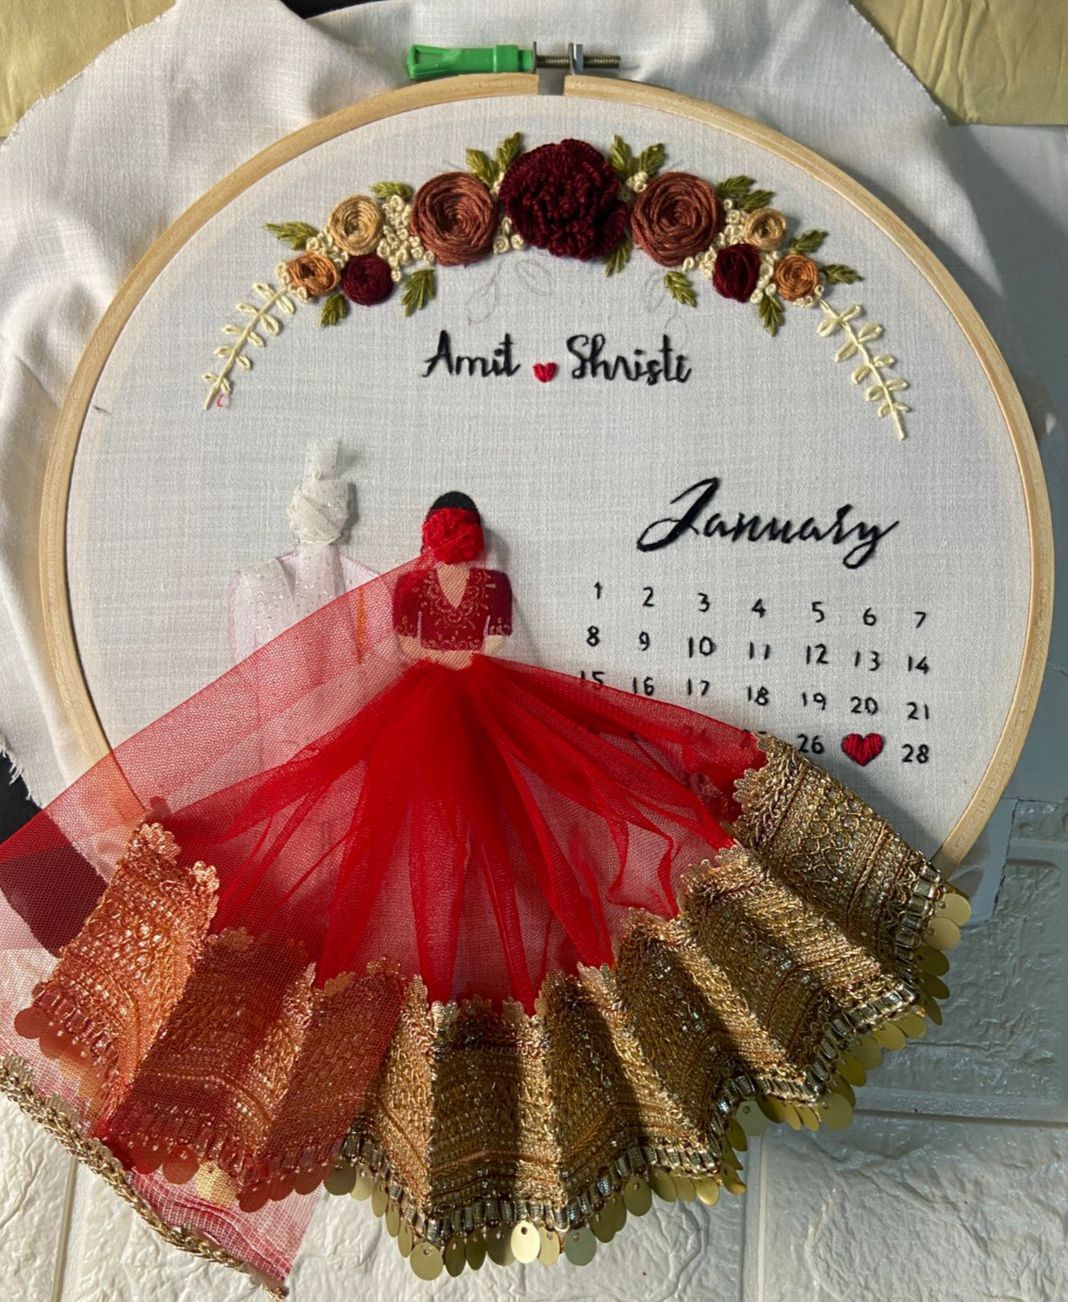 Embroidery Hoop Calendar